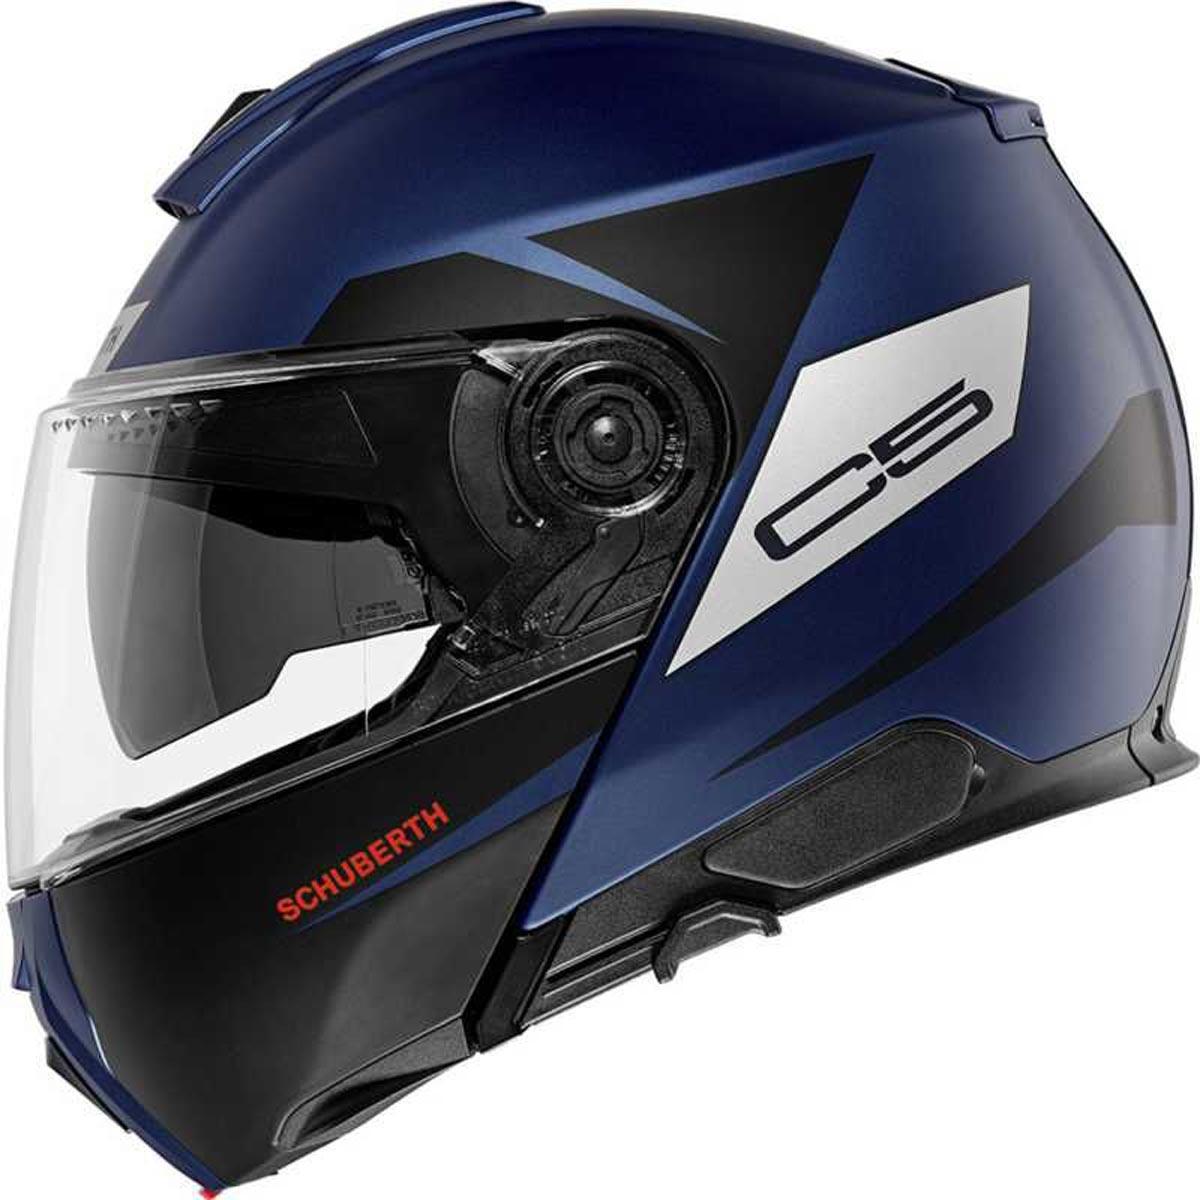 Schuberth C5 Flip Helmet Eclipse - Blue - getgearedshop